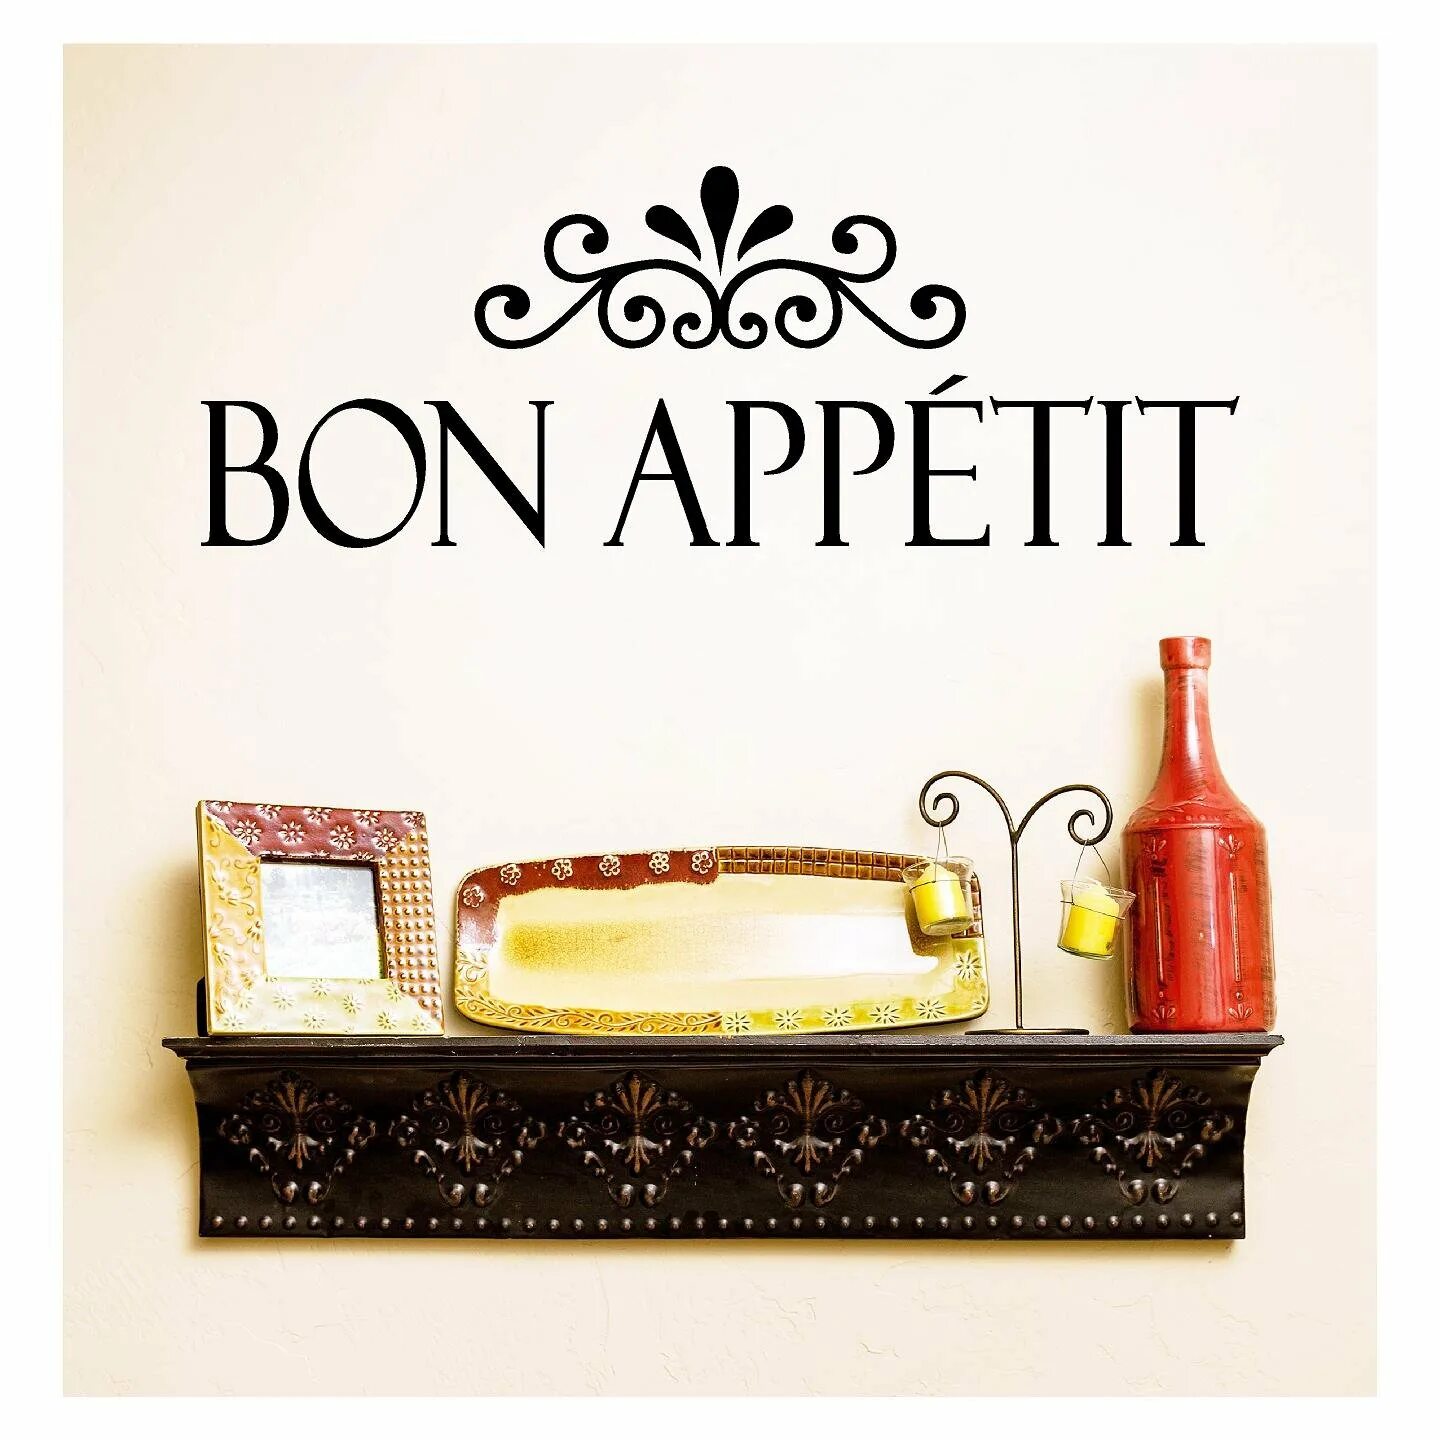 Бон Апети. Бон аппетит фон. Bon Appetit logo.